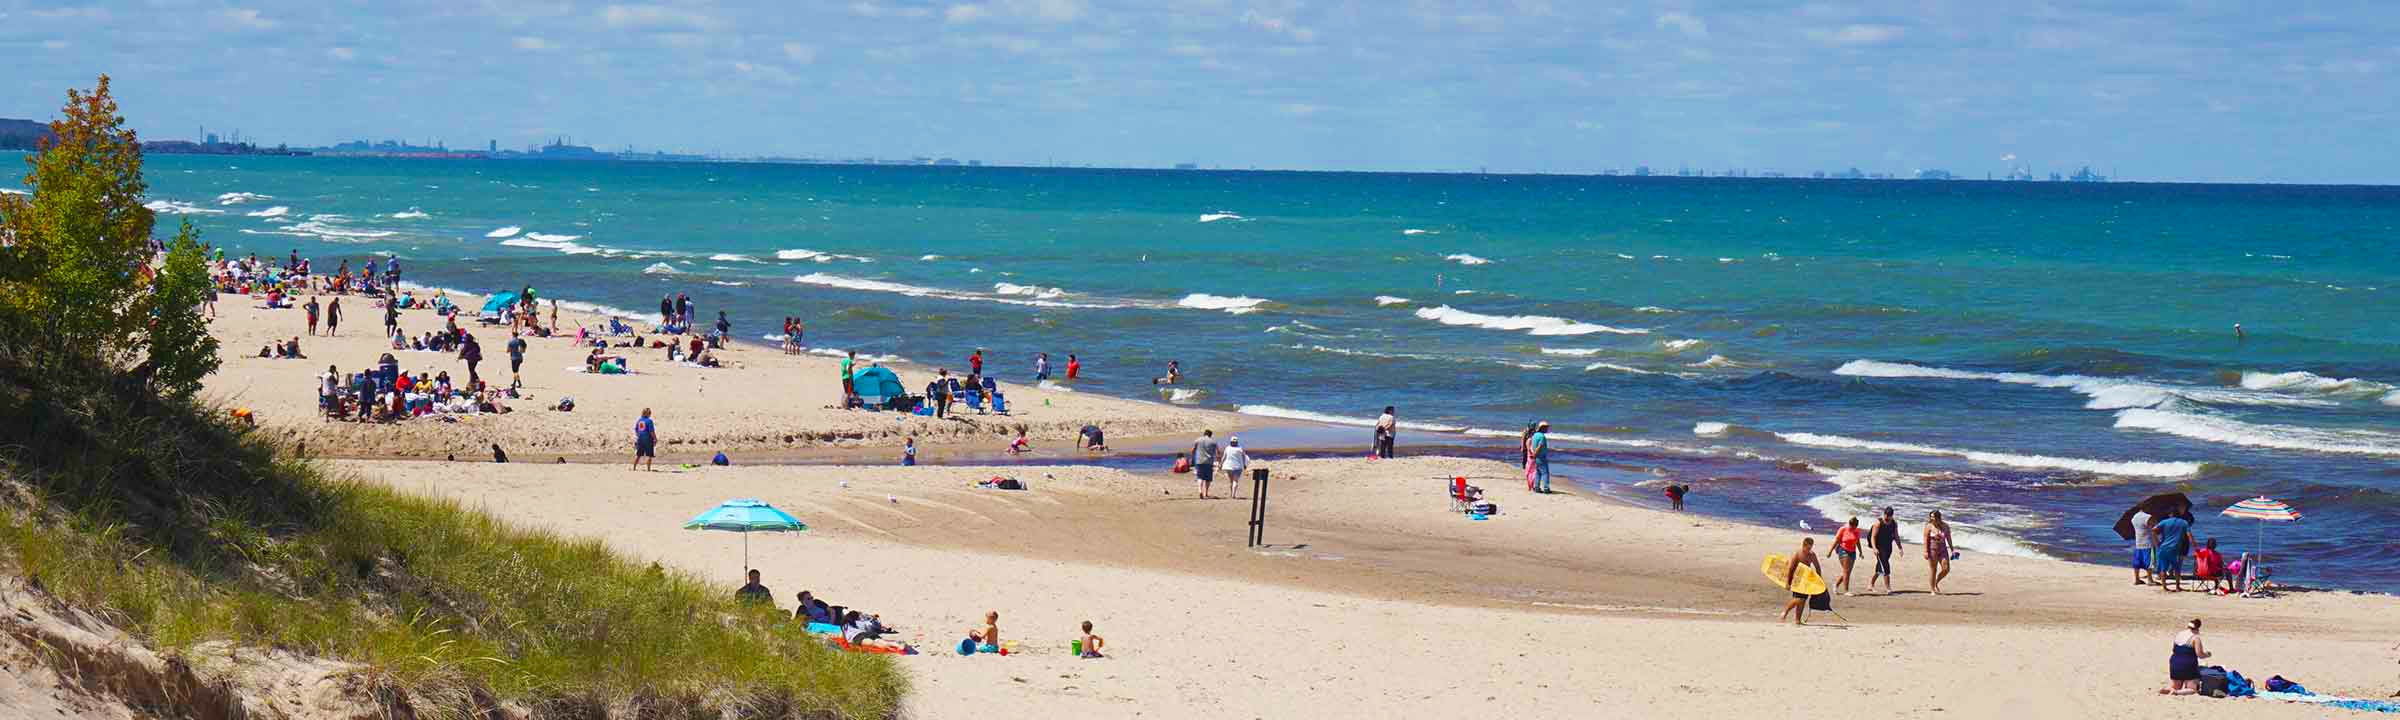 Indiana Dunes Beach Banner Pic